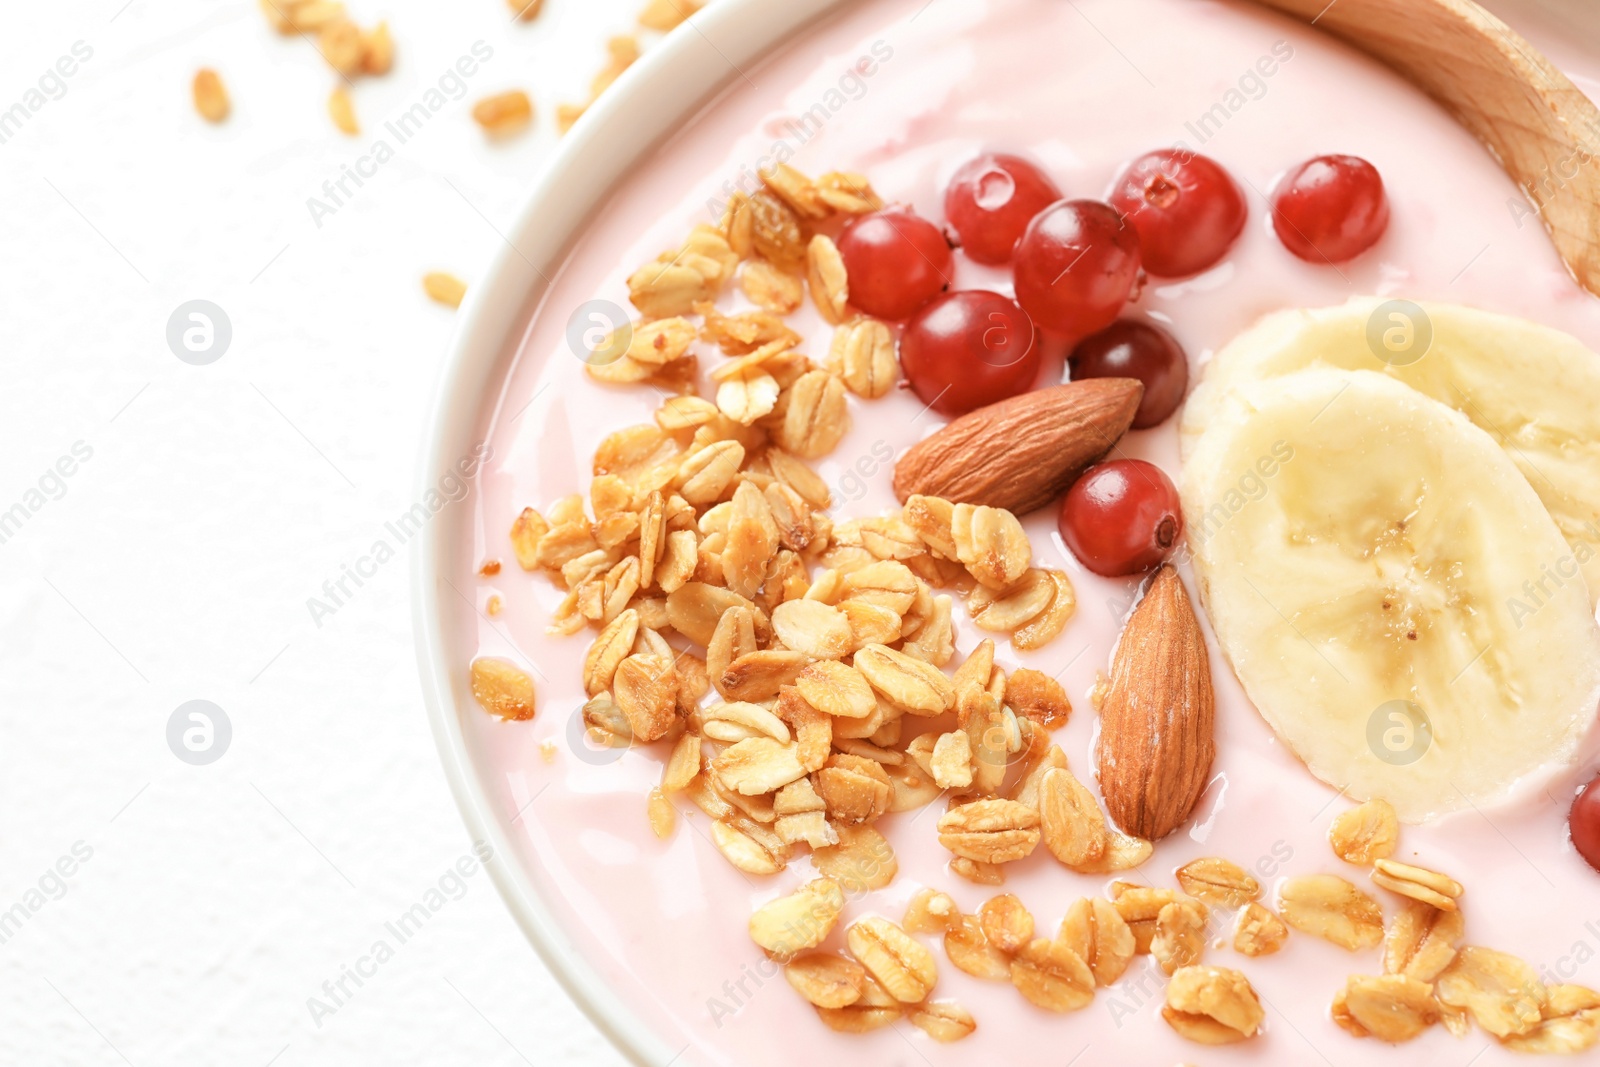 Photo of Bowl with delicious yogurt and granola, closeup